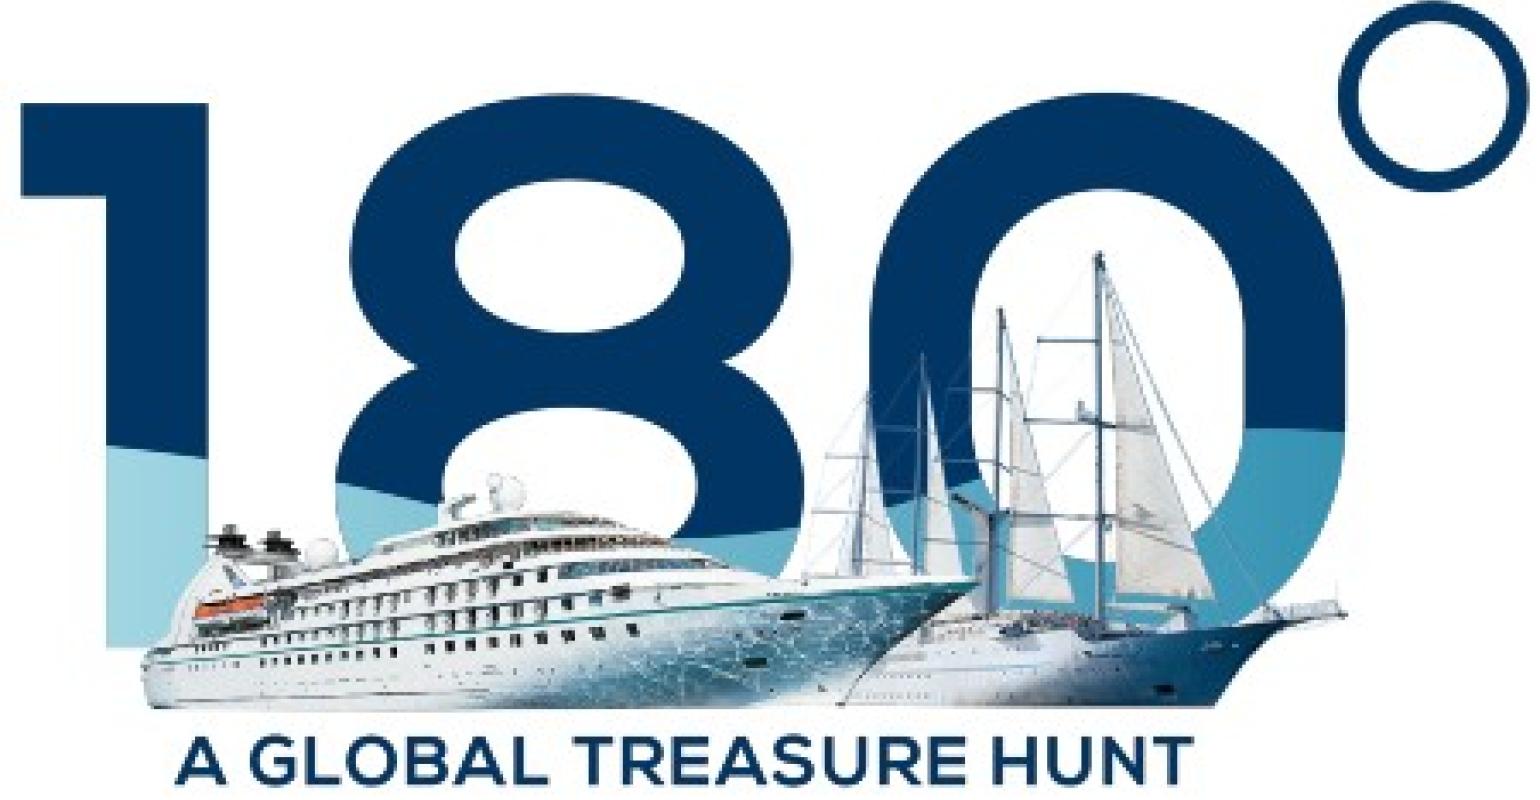 Windstar Cruises unleashes a treasure hunt